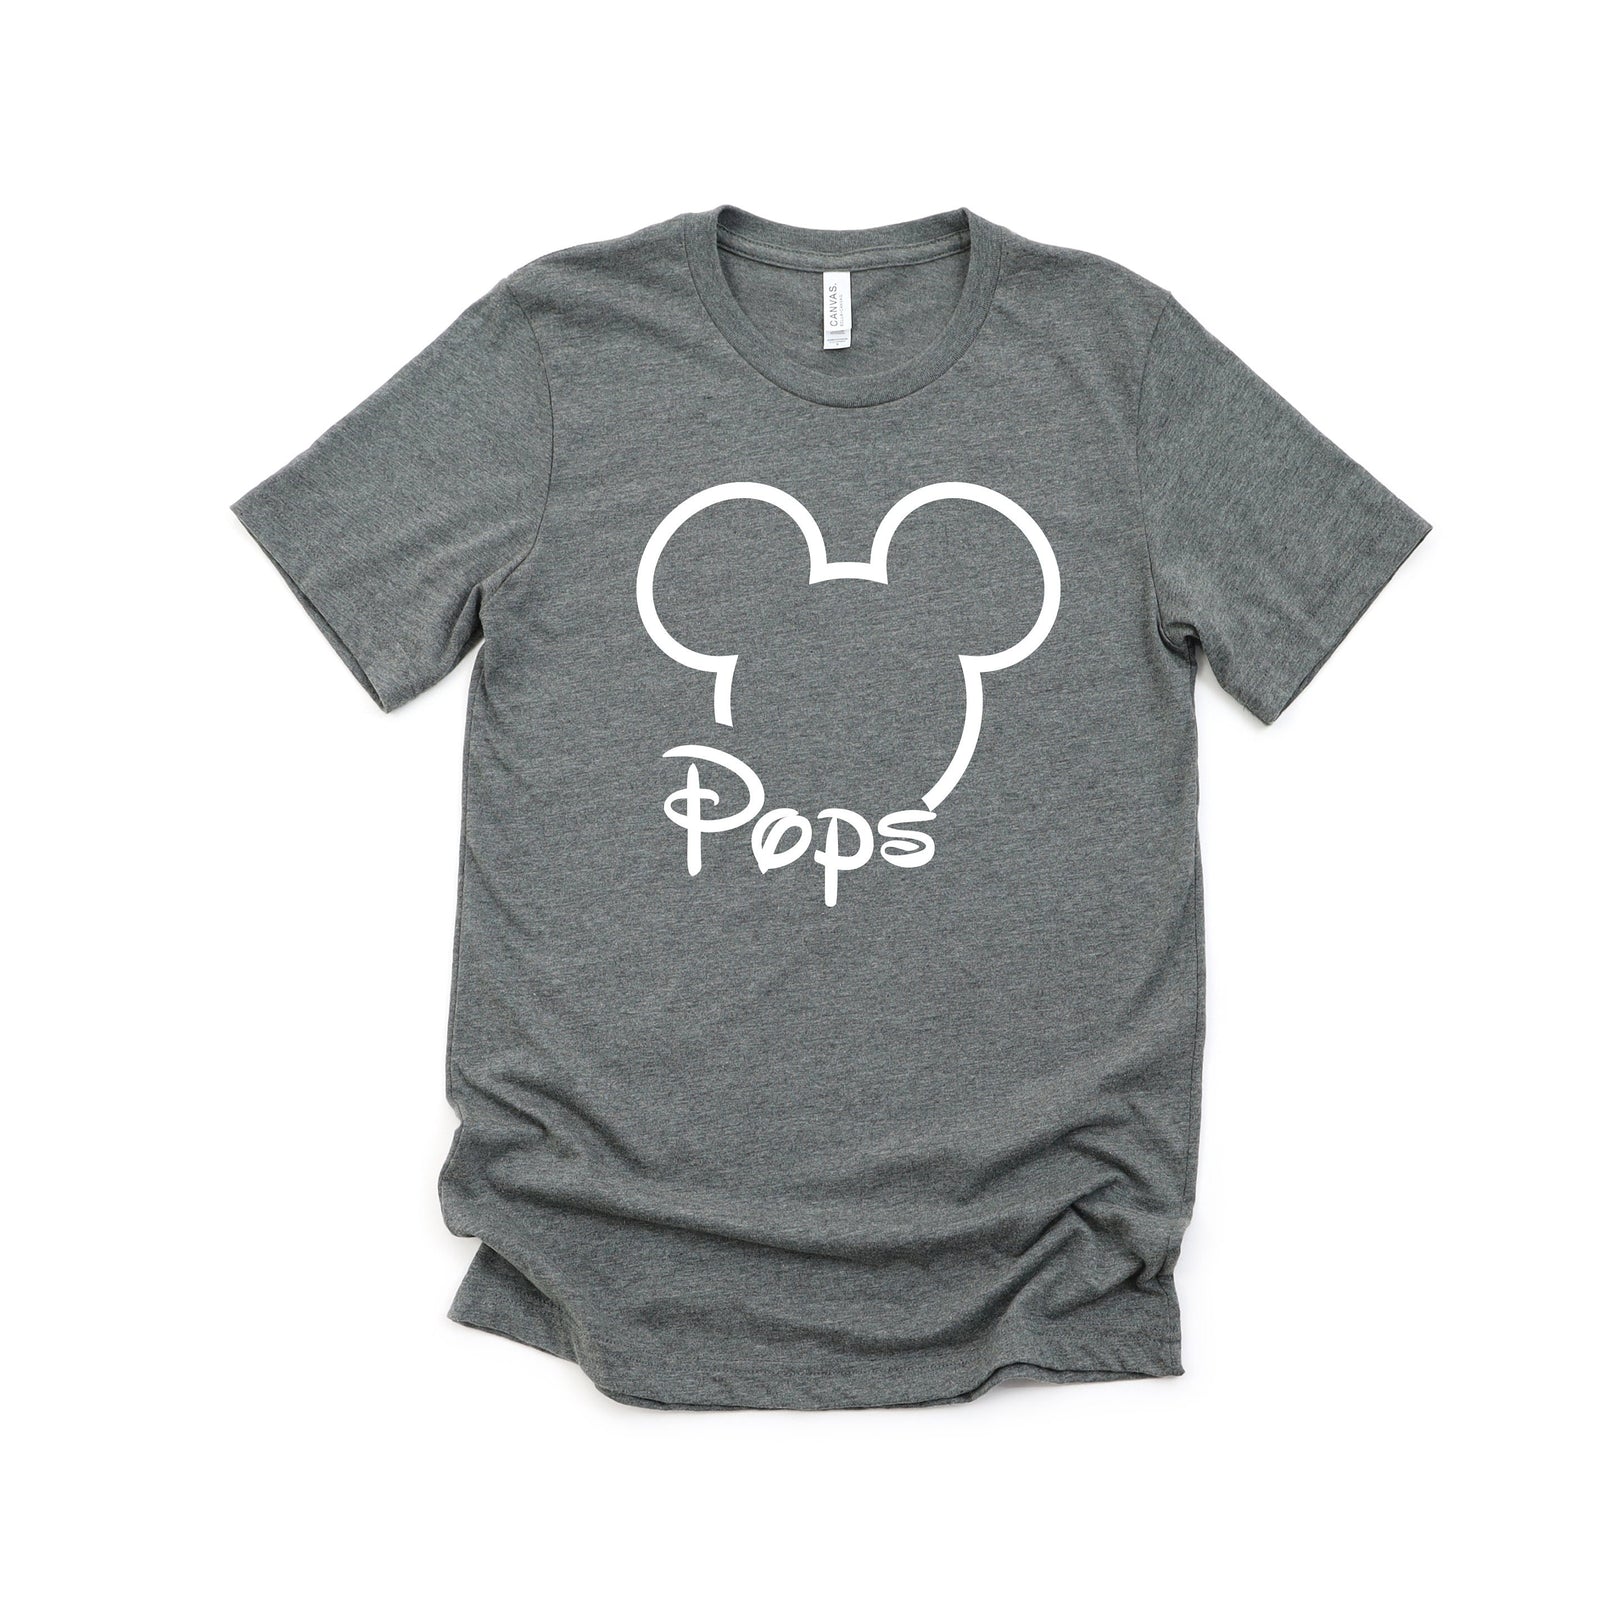 Pops Mickey Mouse t shirt - Disney Trip Matching Shirts -Family Matching Disney Shirts - Custom Name